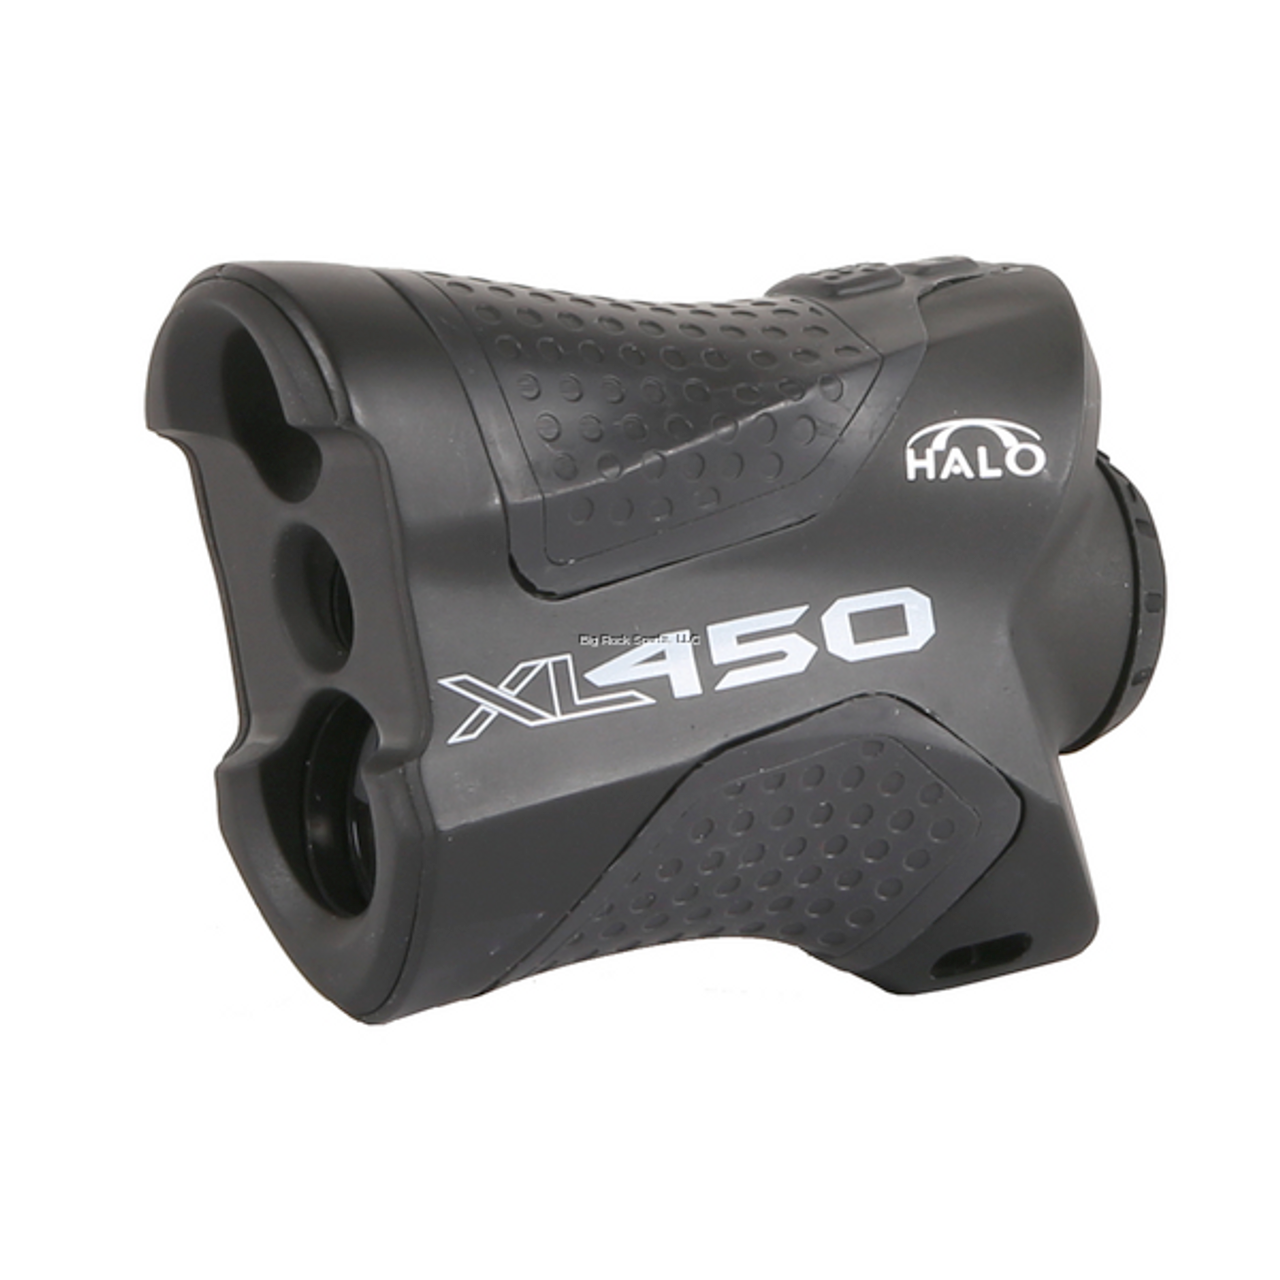 Halo Optics XL450 Laser Range Finder, 450 Yards, 4x Magnification, AI Angle Technology